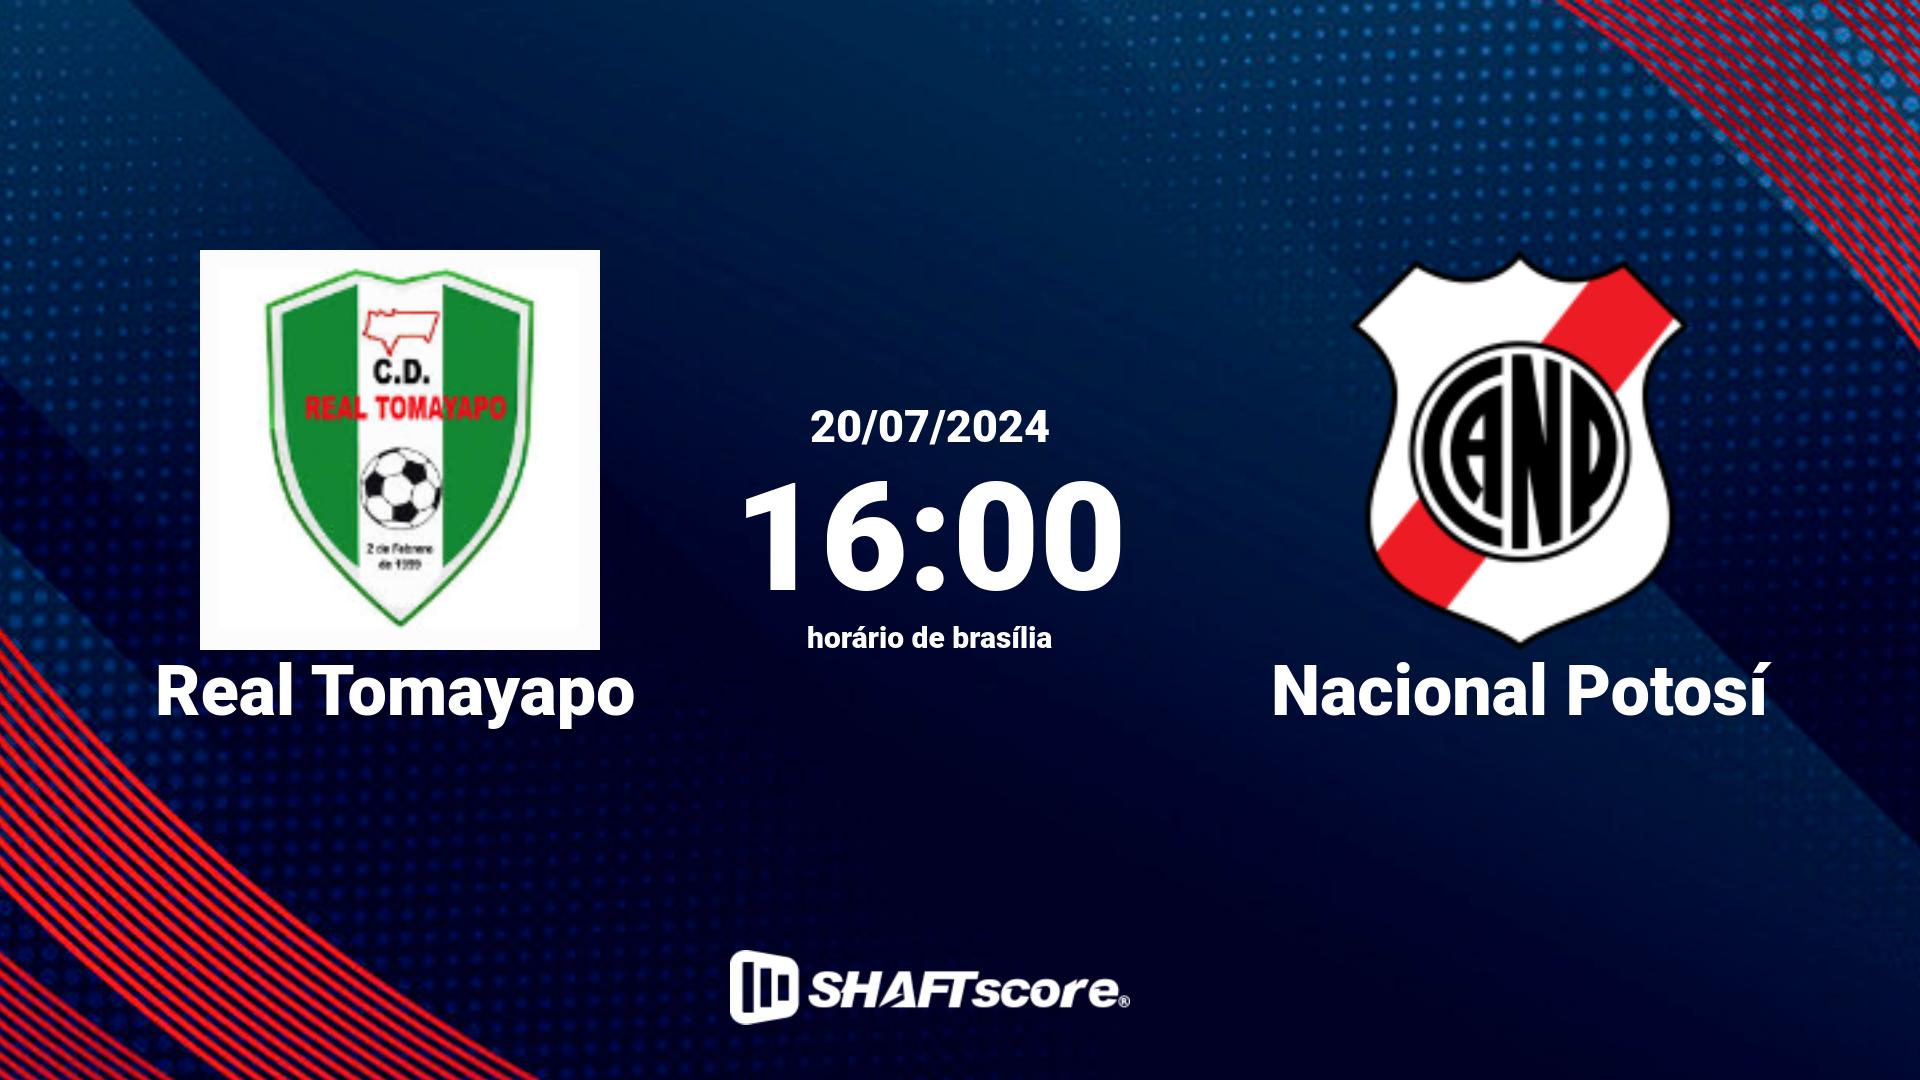 Estatísticas do jogo Real Tomayapo vs Nacional Potosí 20.07 16:00